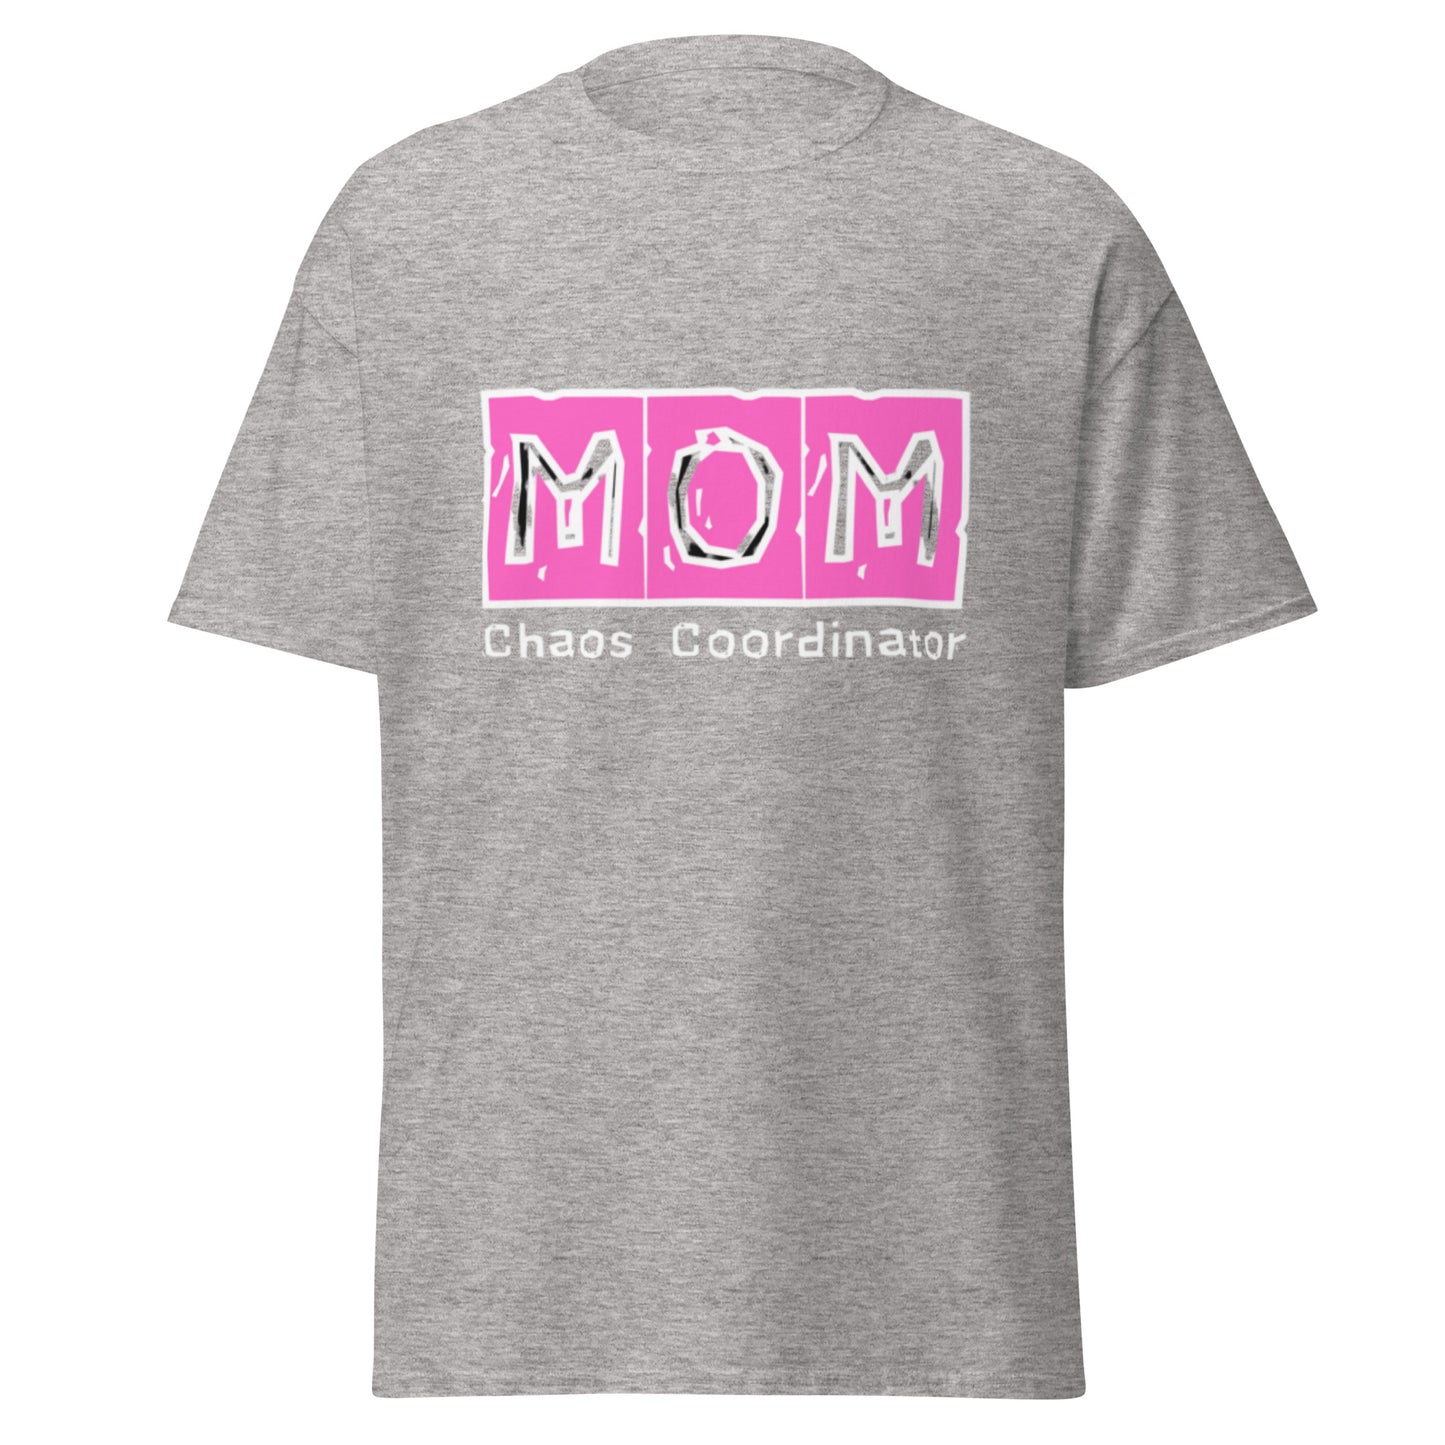 MOM Chaos Coordinator classic T-shirt